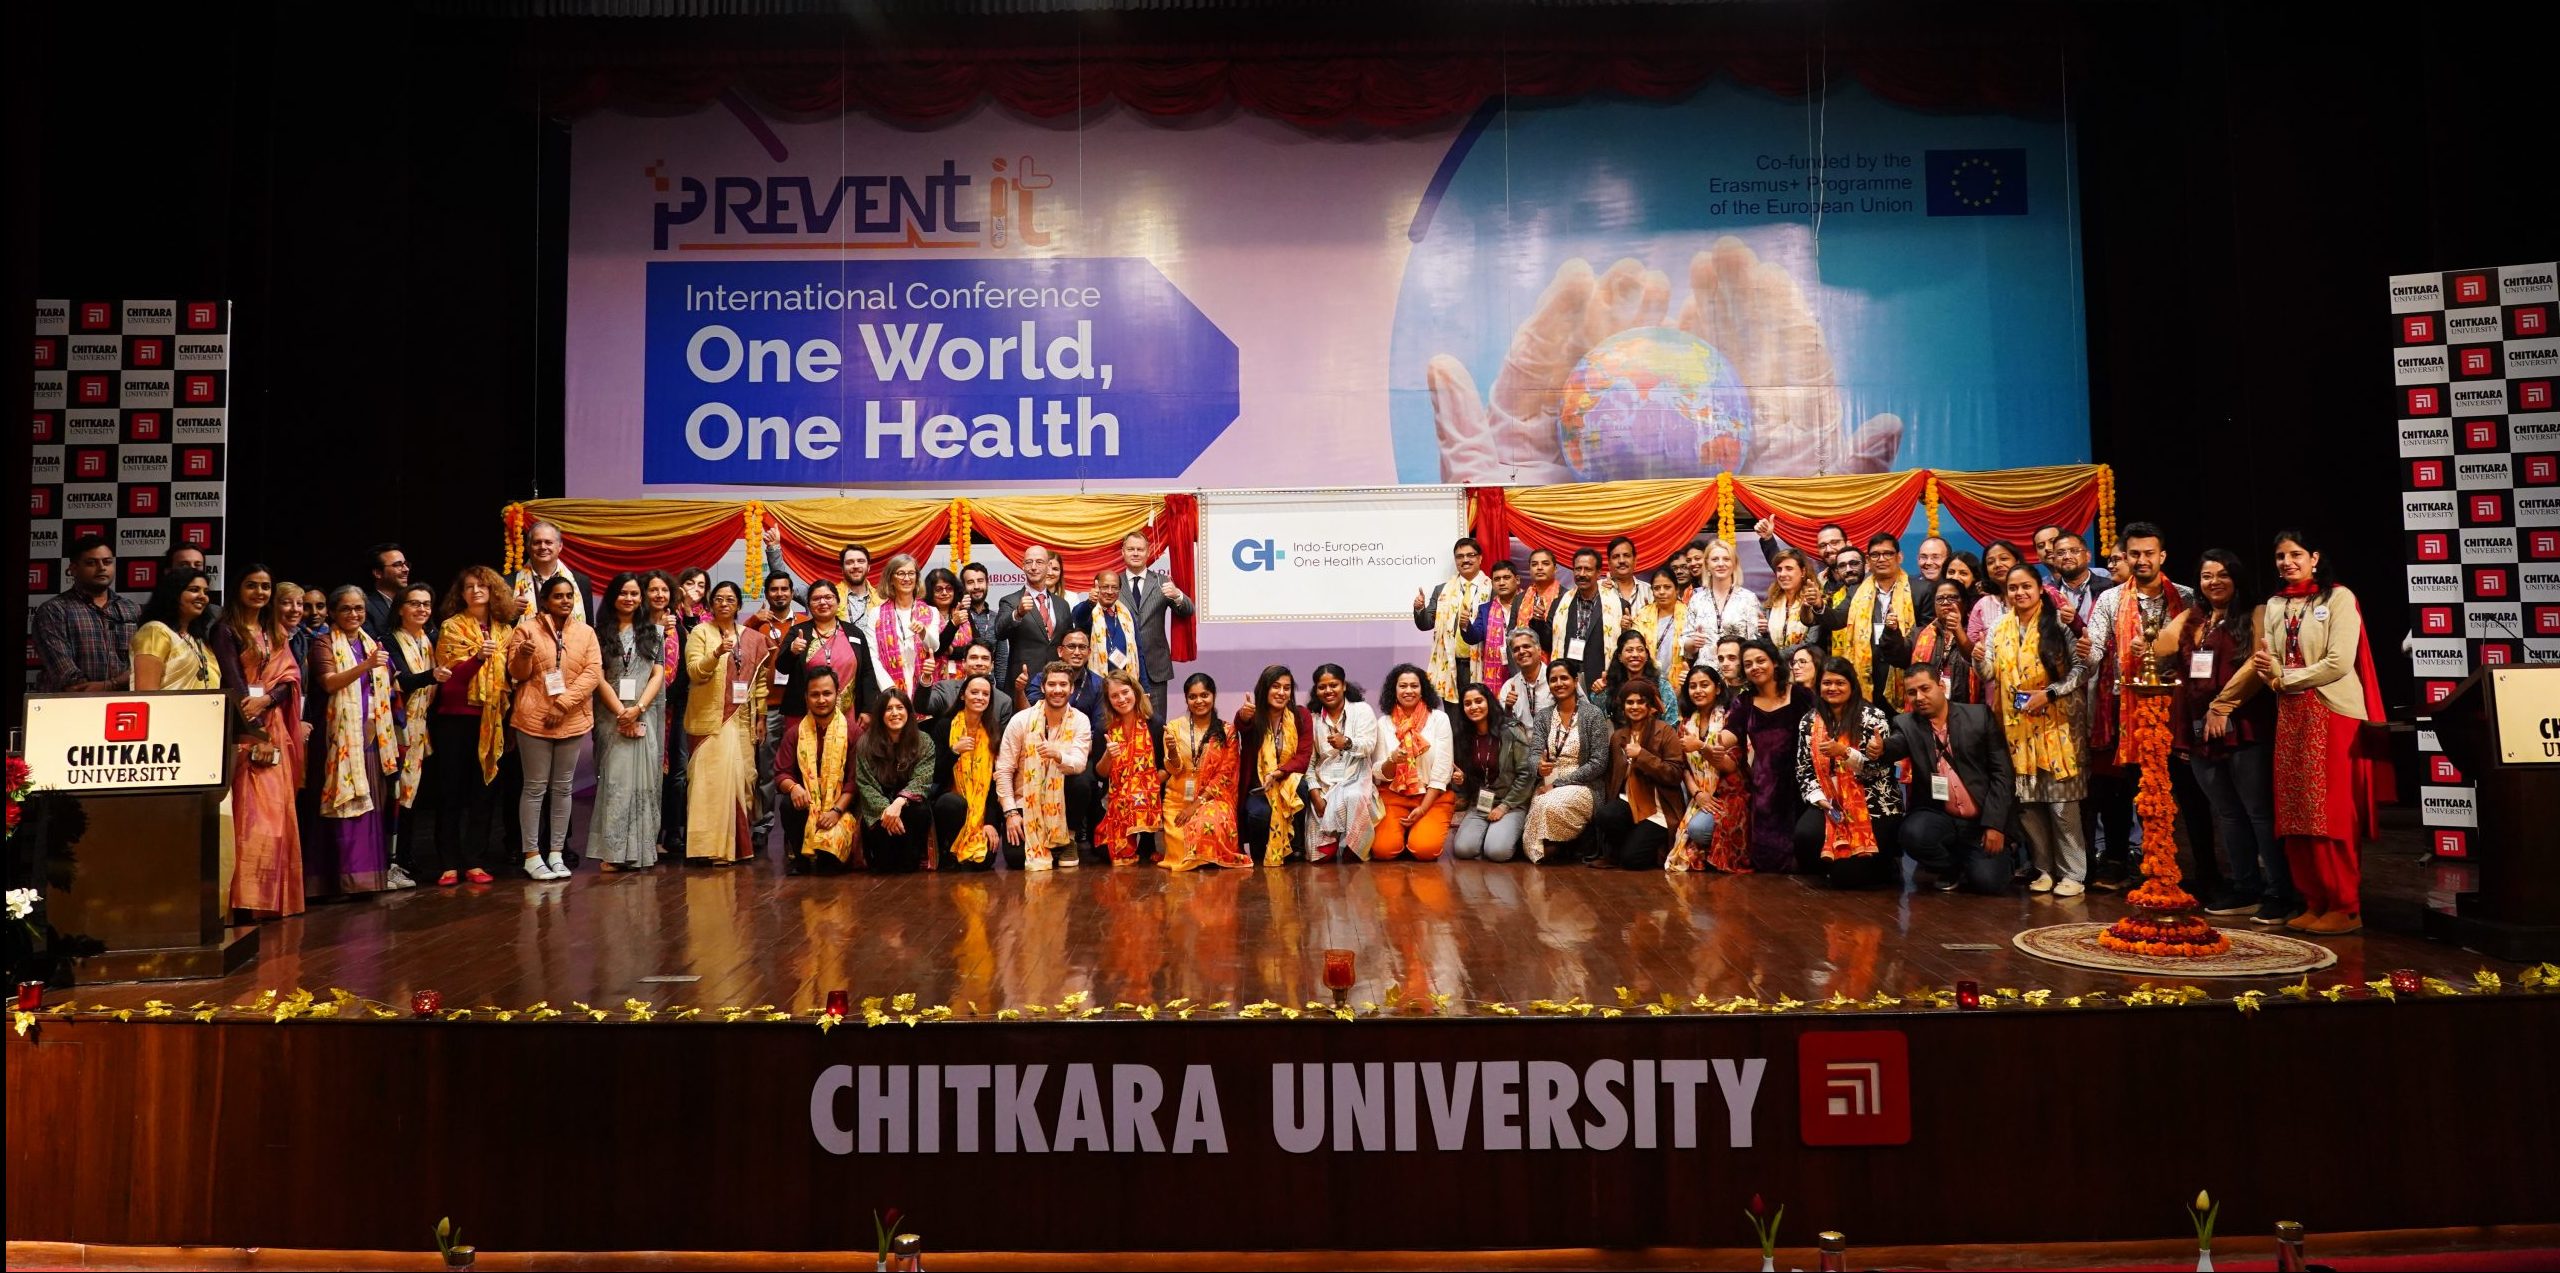 International Conference “One World, One Health” at Chitkara University, India